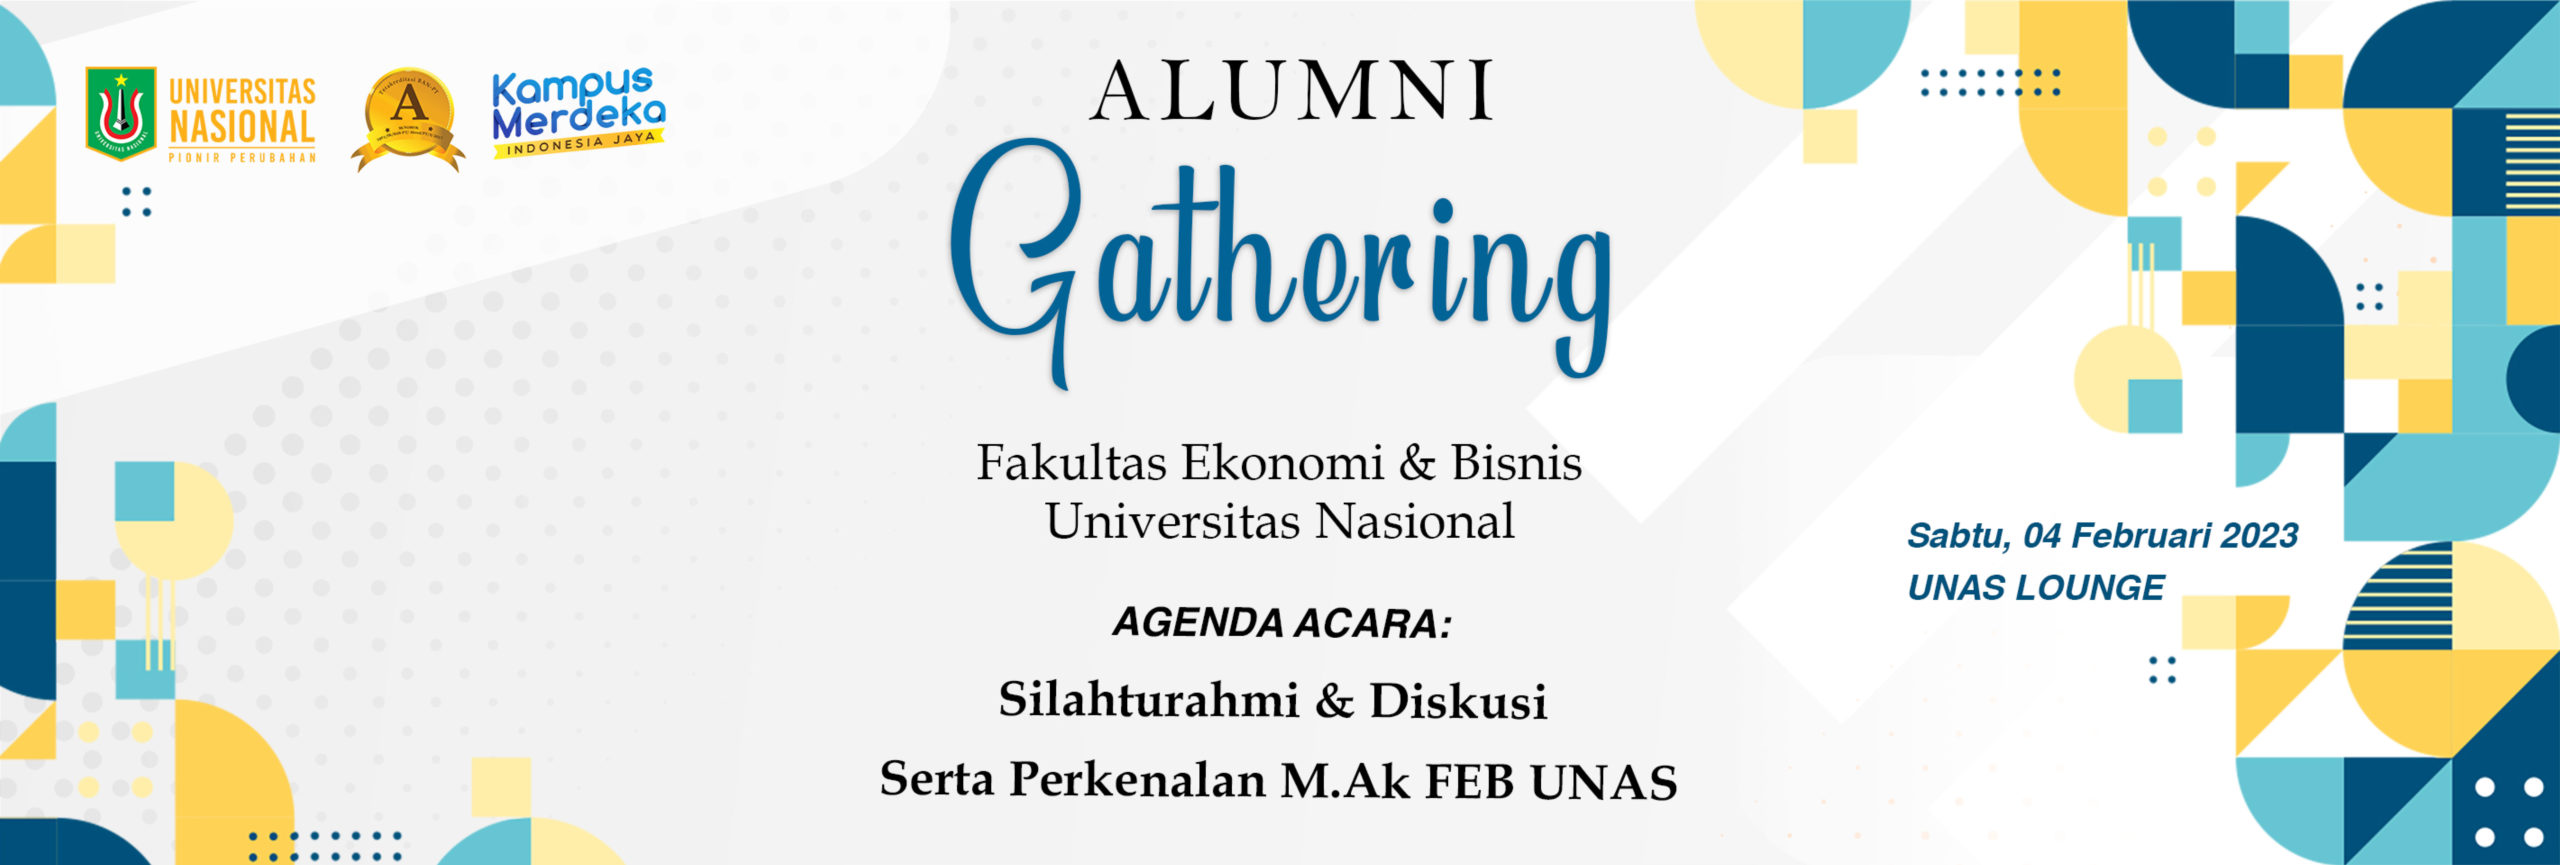 Alumni Gathering Fakultas Ekonomi & Bisnis UNAS